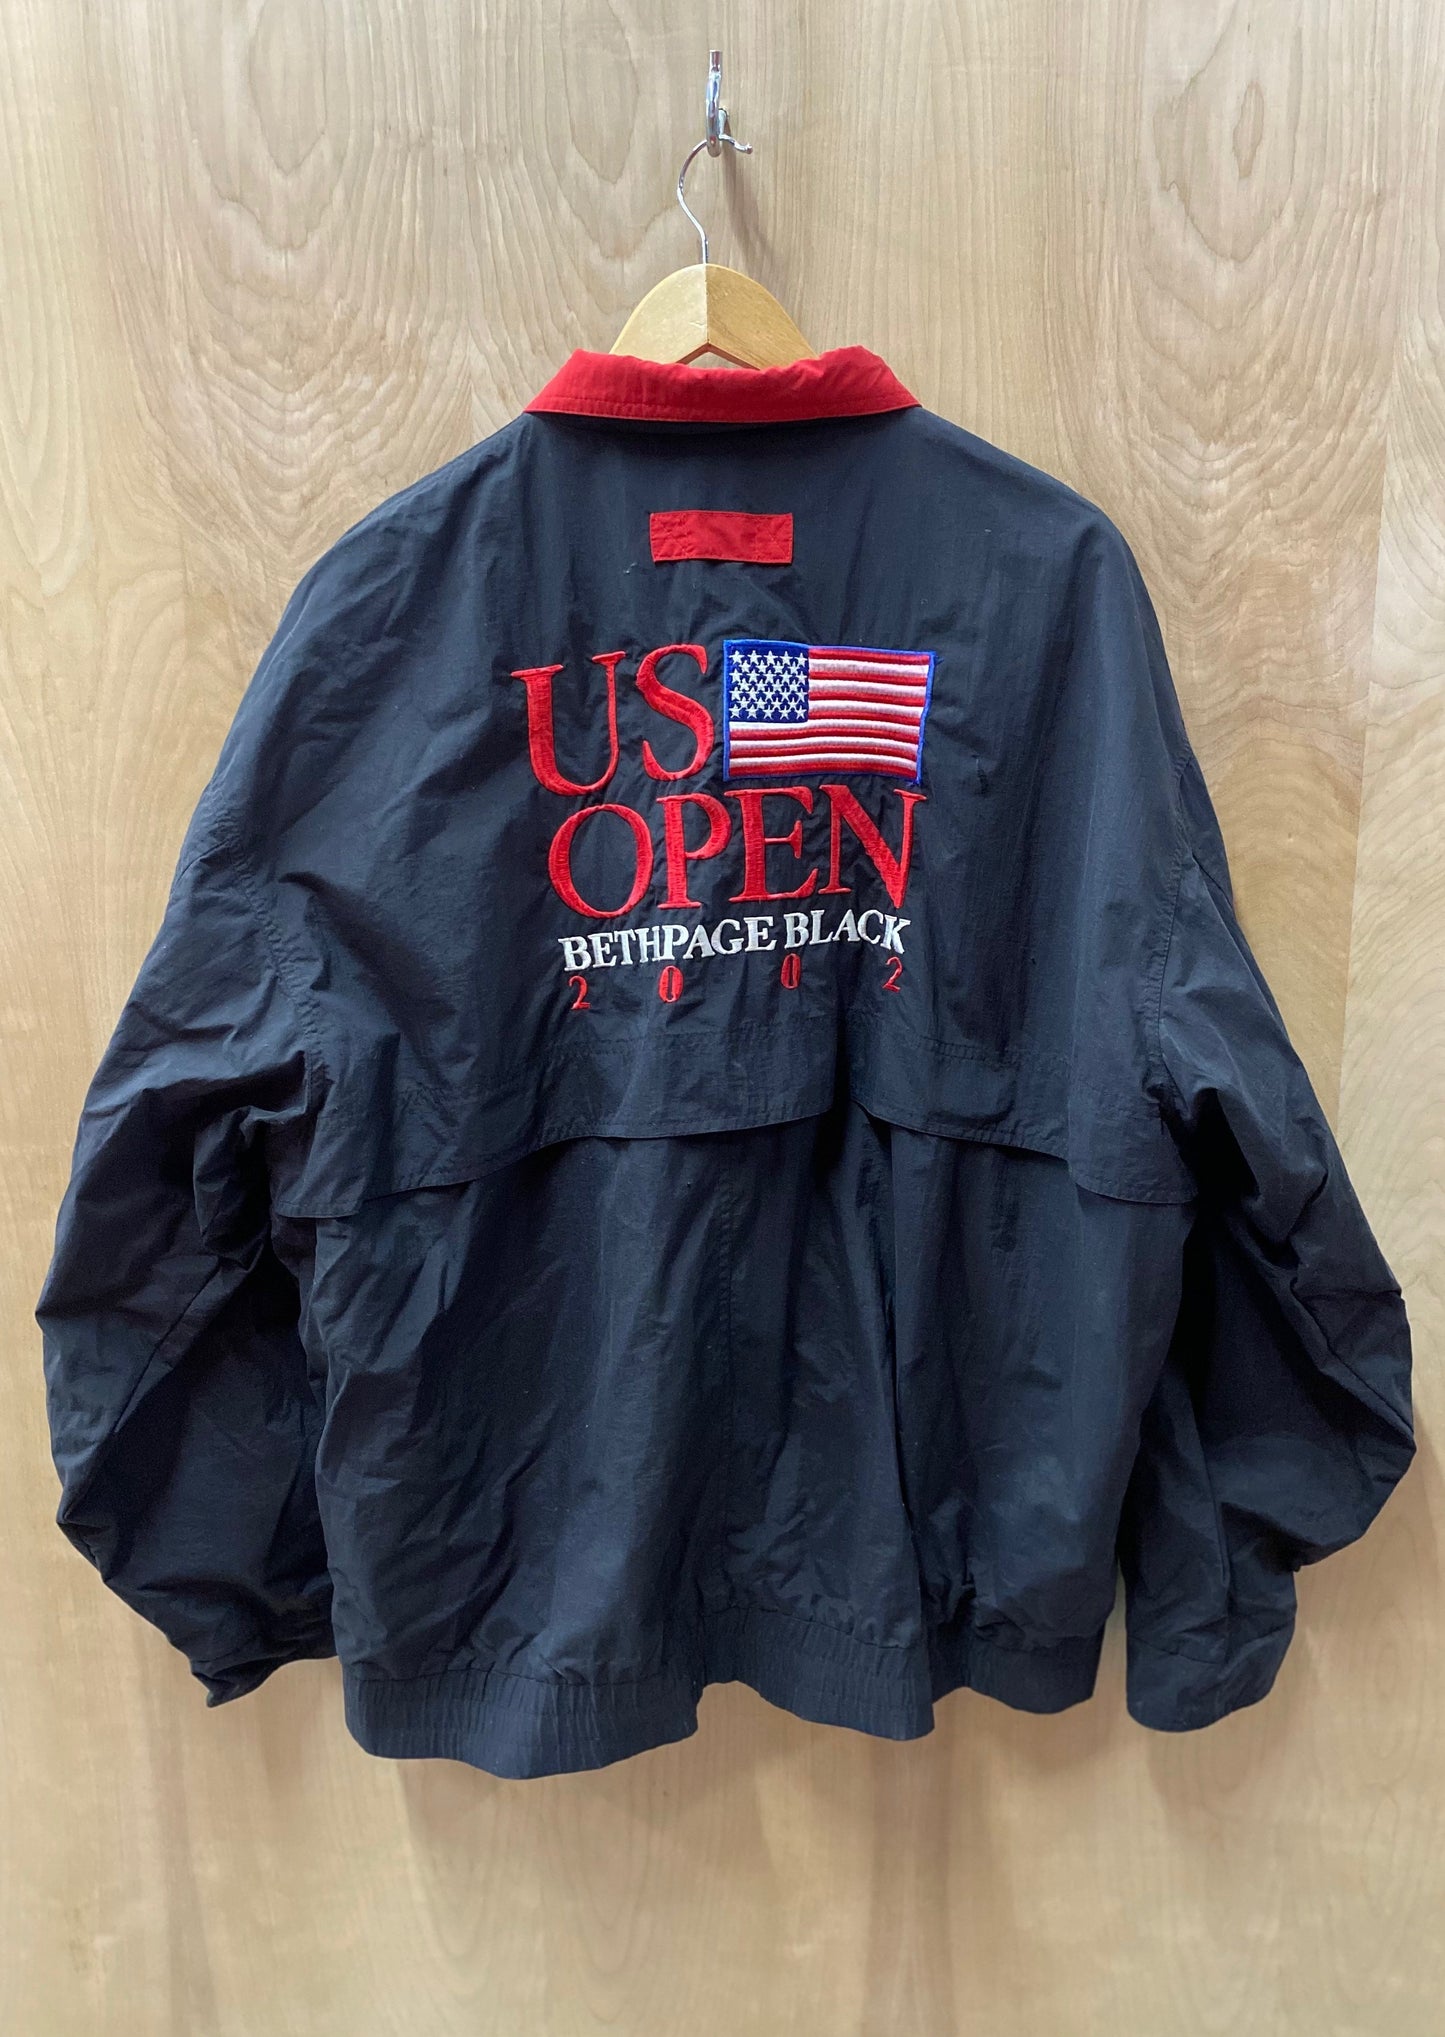 2002 U.S Open Bethpage Black player jacket (4811525849168)